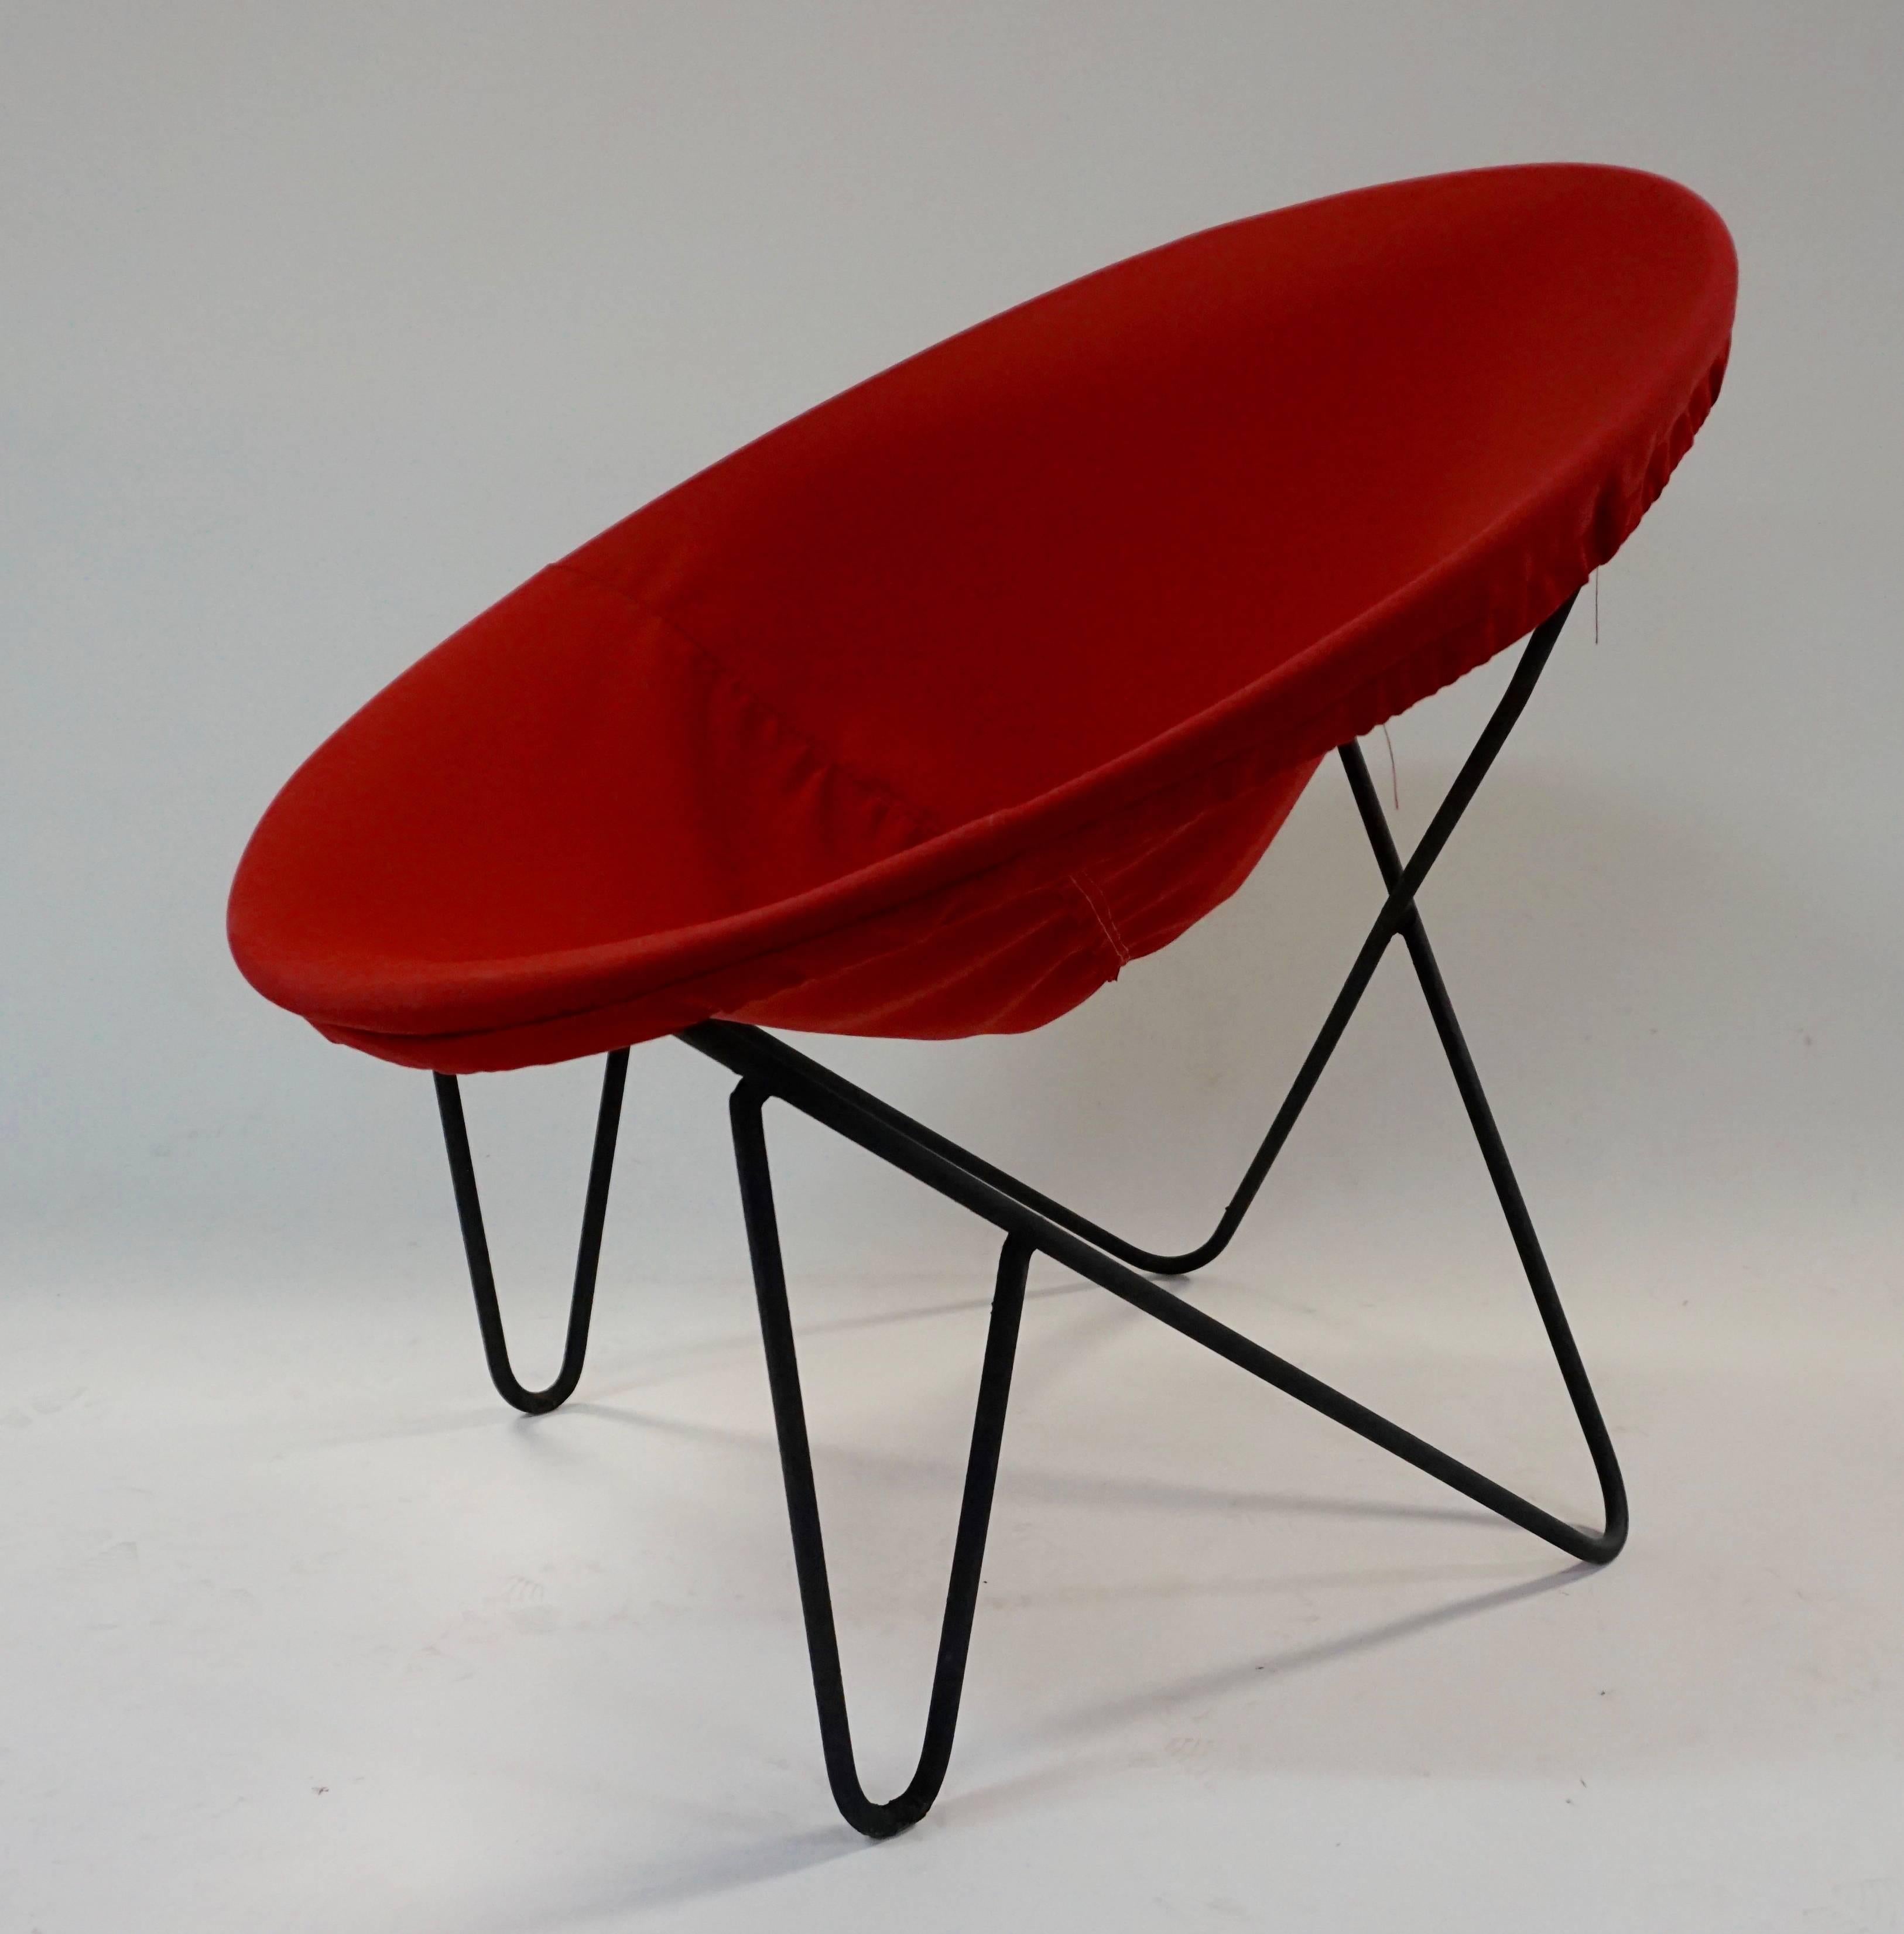 lightweight Sunbrella - indoor/outdoor fabric. solid iron frame.Just put new red sunbrella on chair.